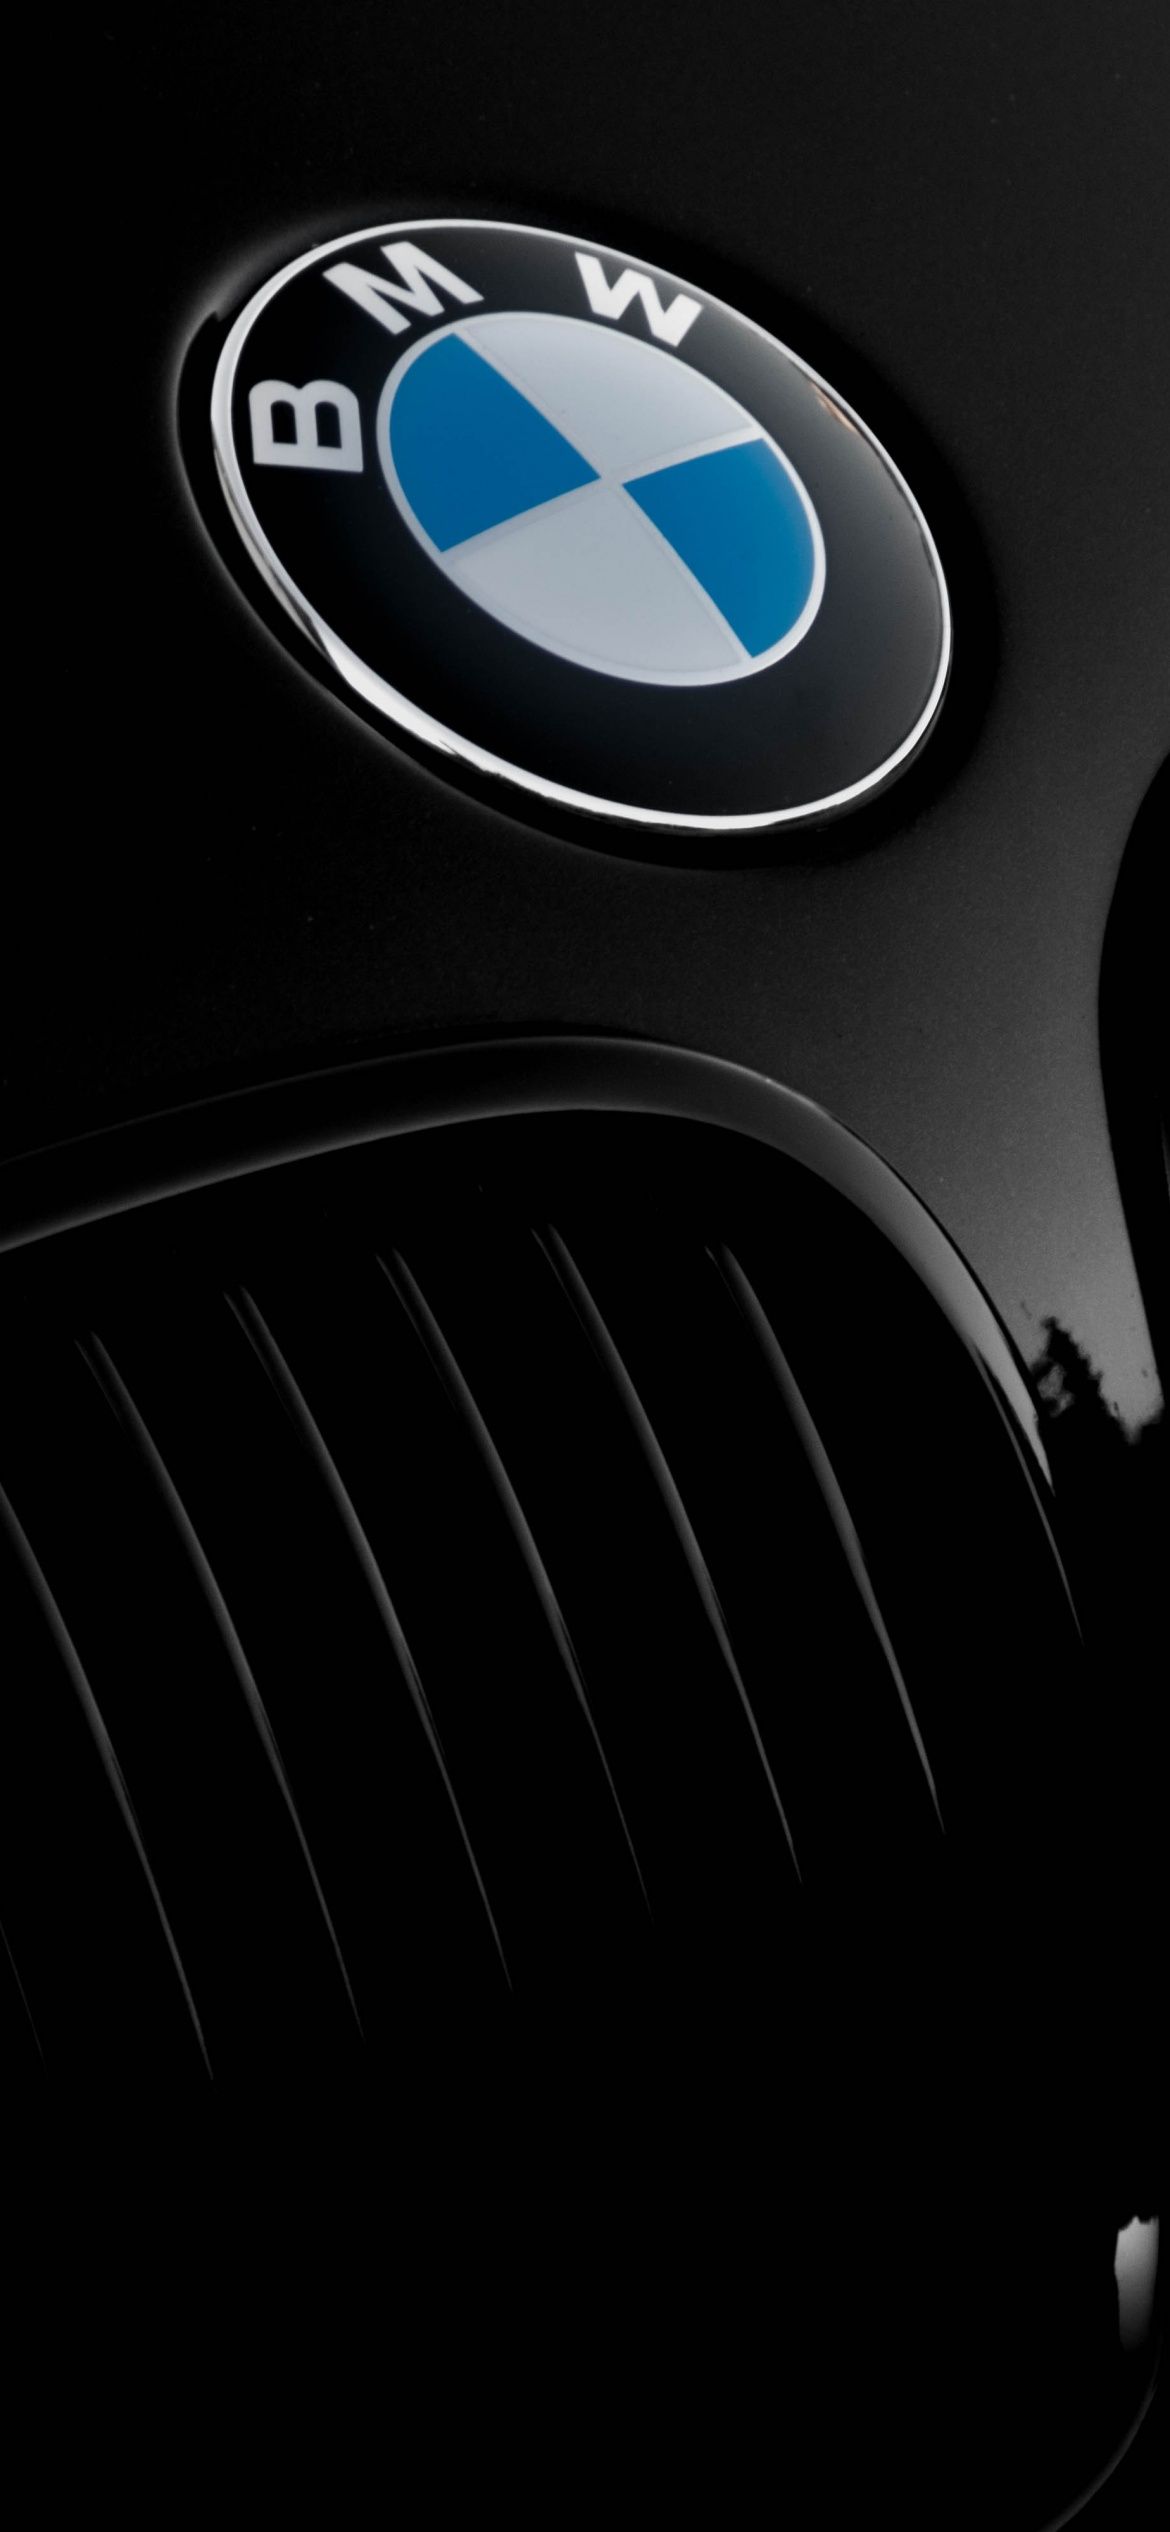 A black bmw car with the logo on it - BMW